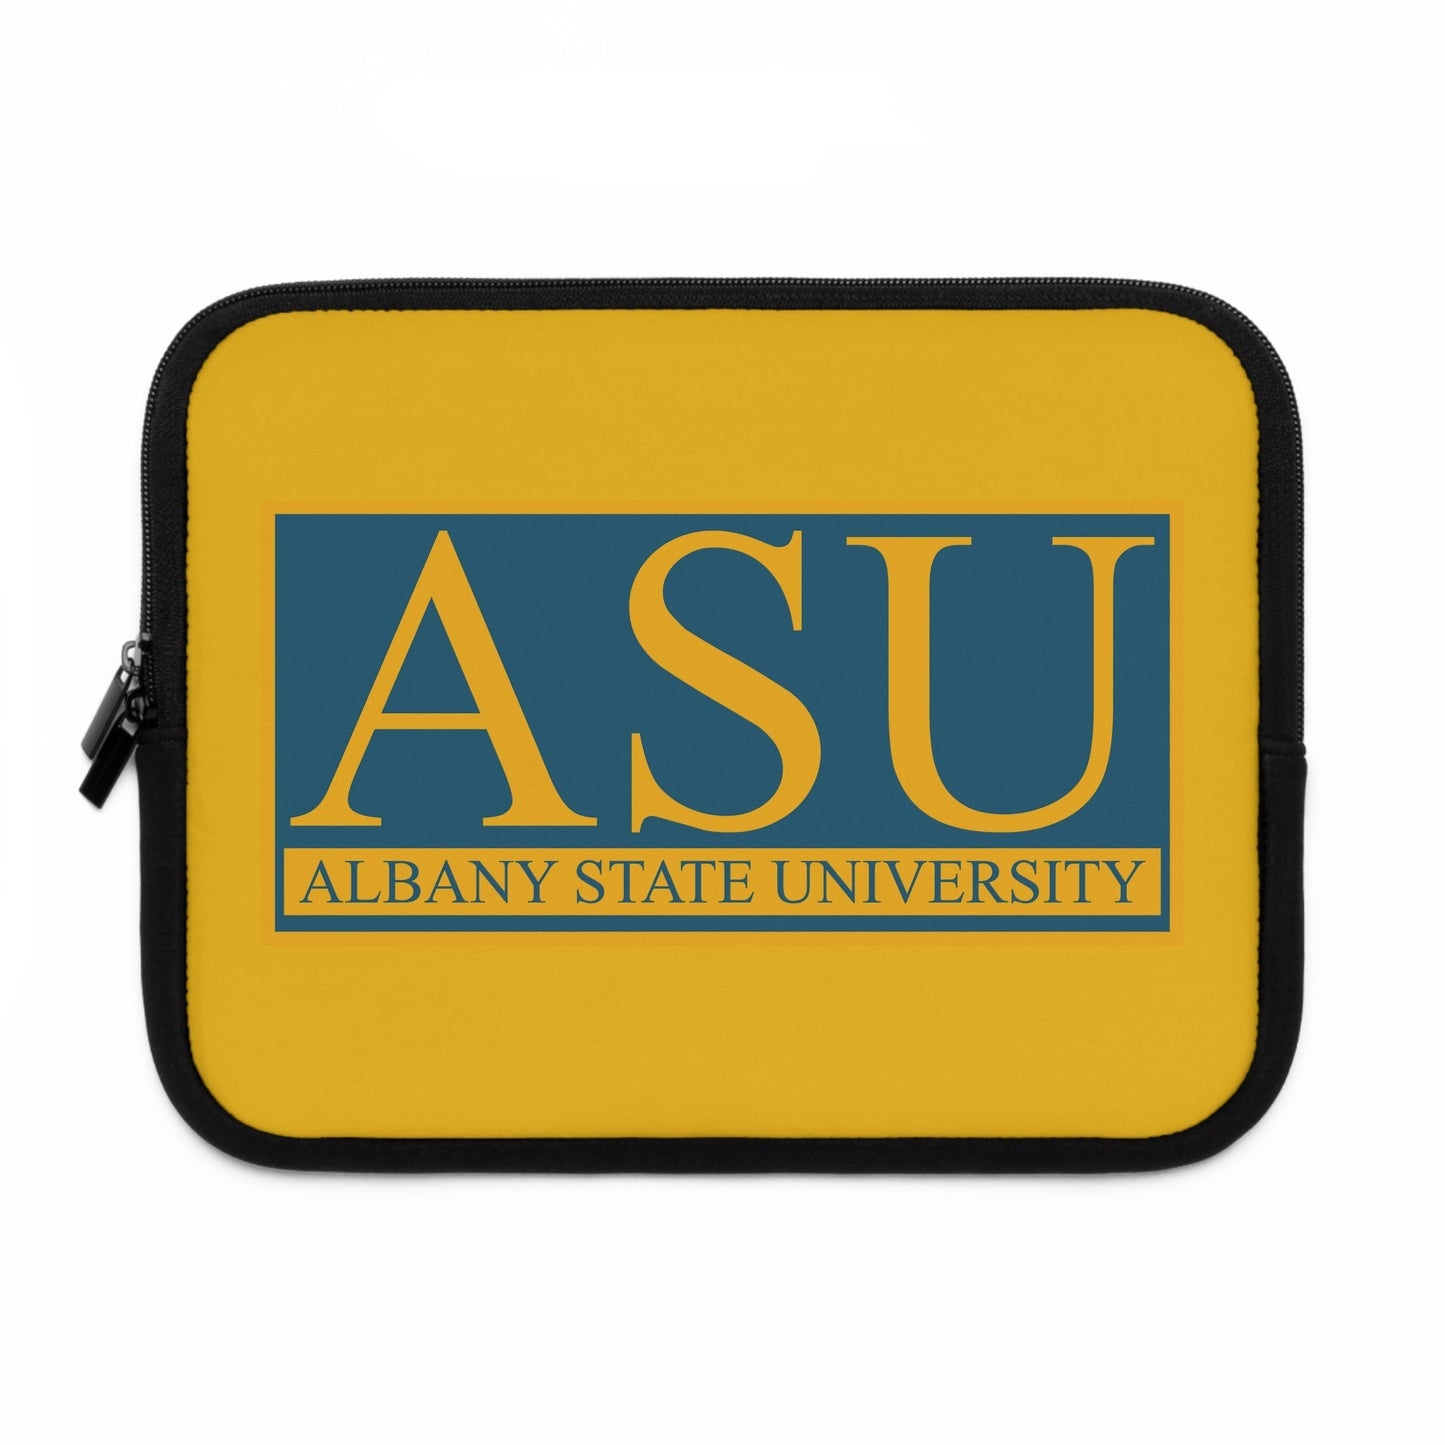 HBCU Love (Albany State University/ Laptop Sleeve)